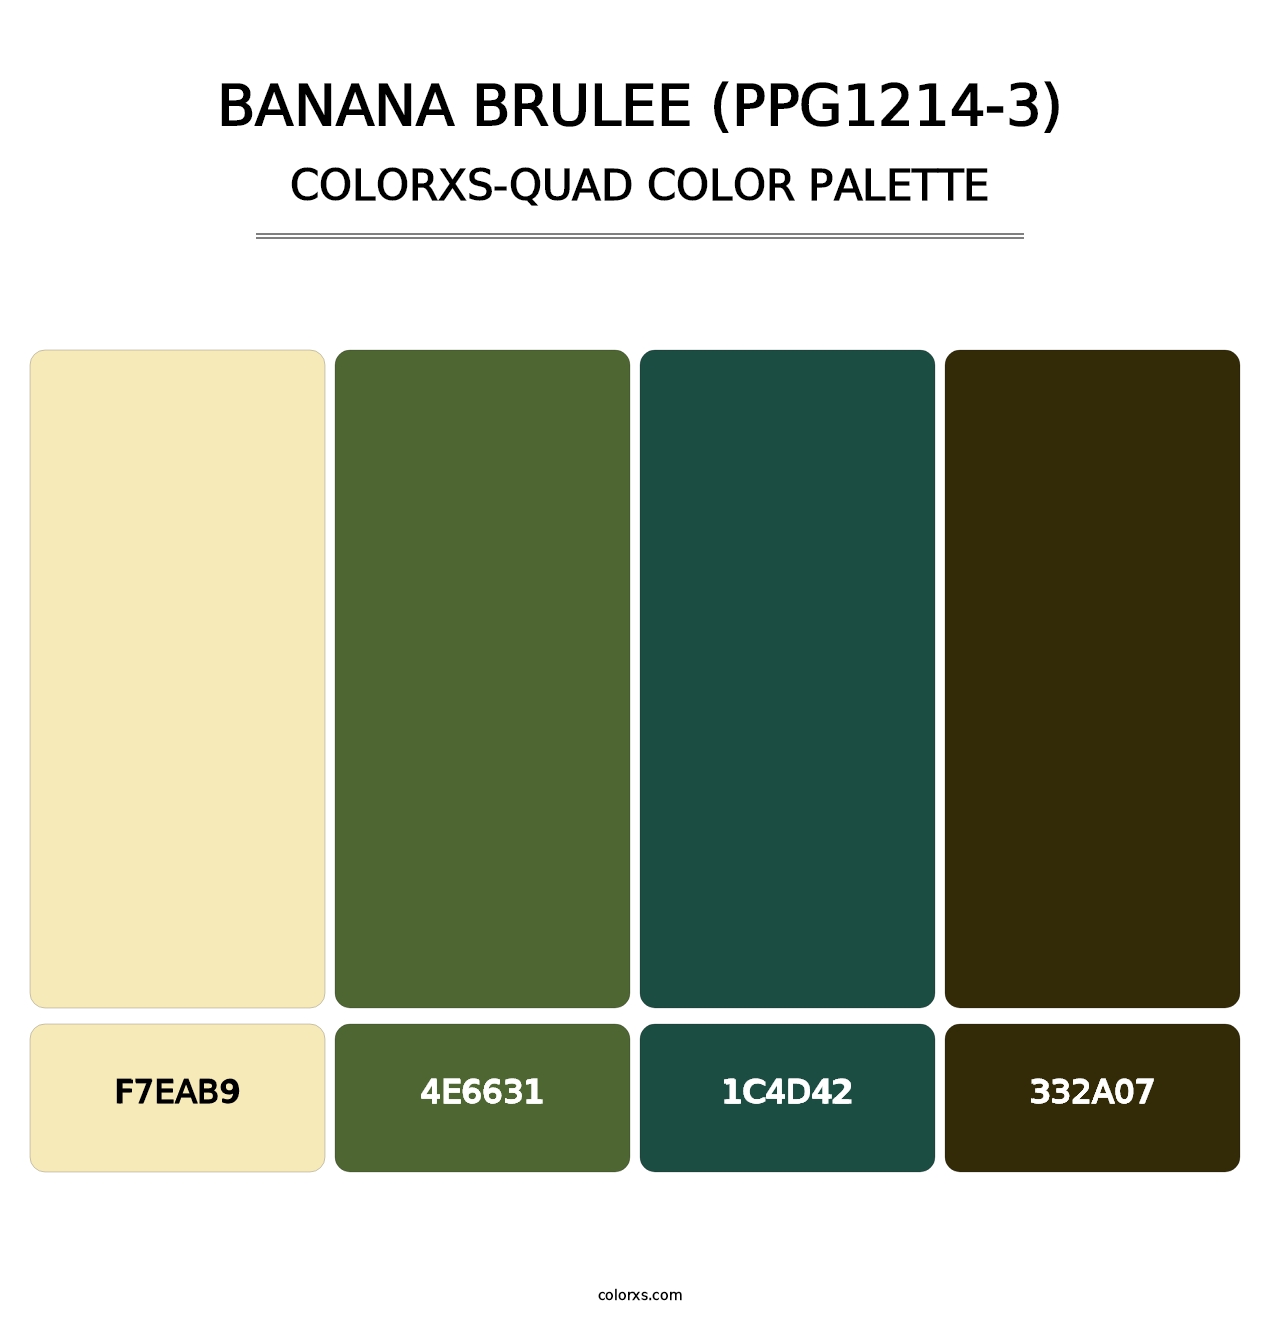 Banana Brulee (PPG1214-3) - Colorxs Quad Palette